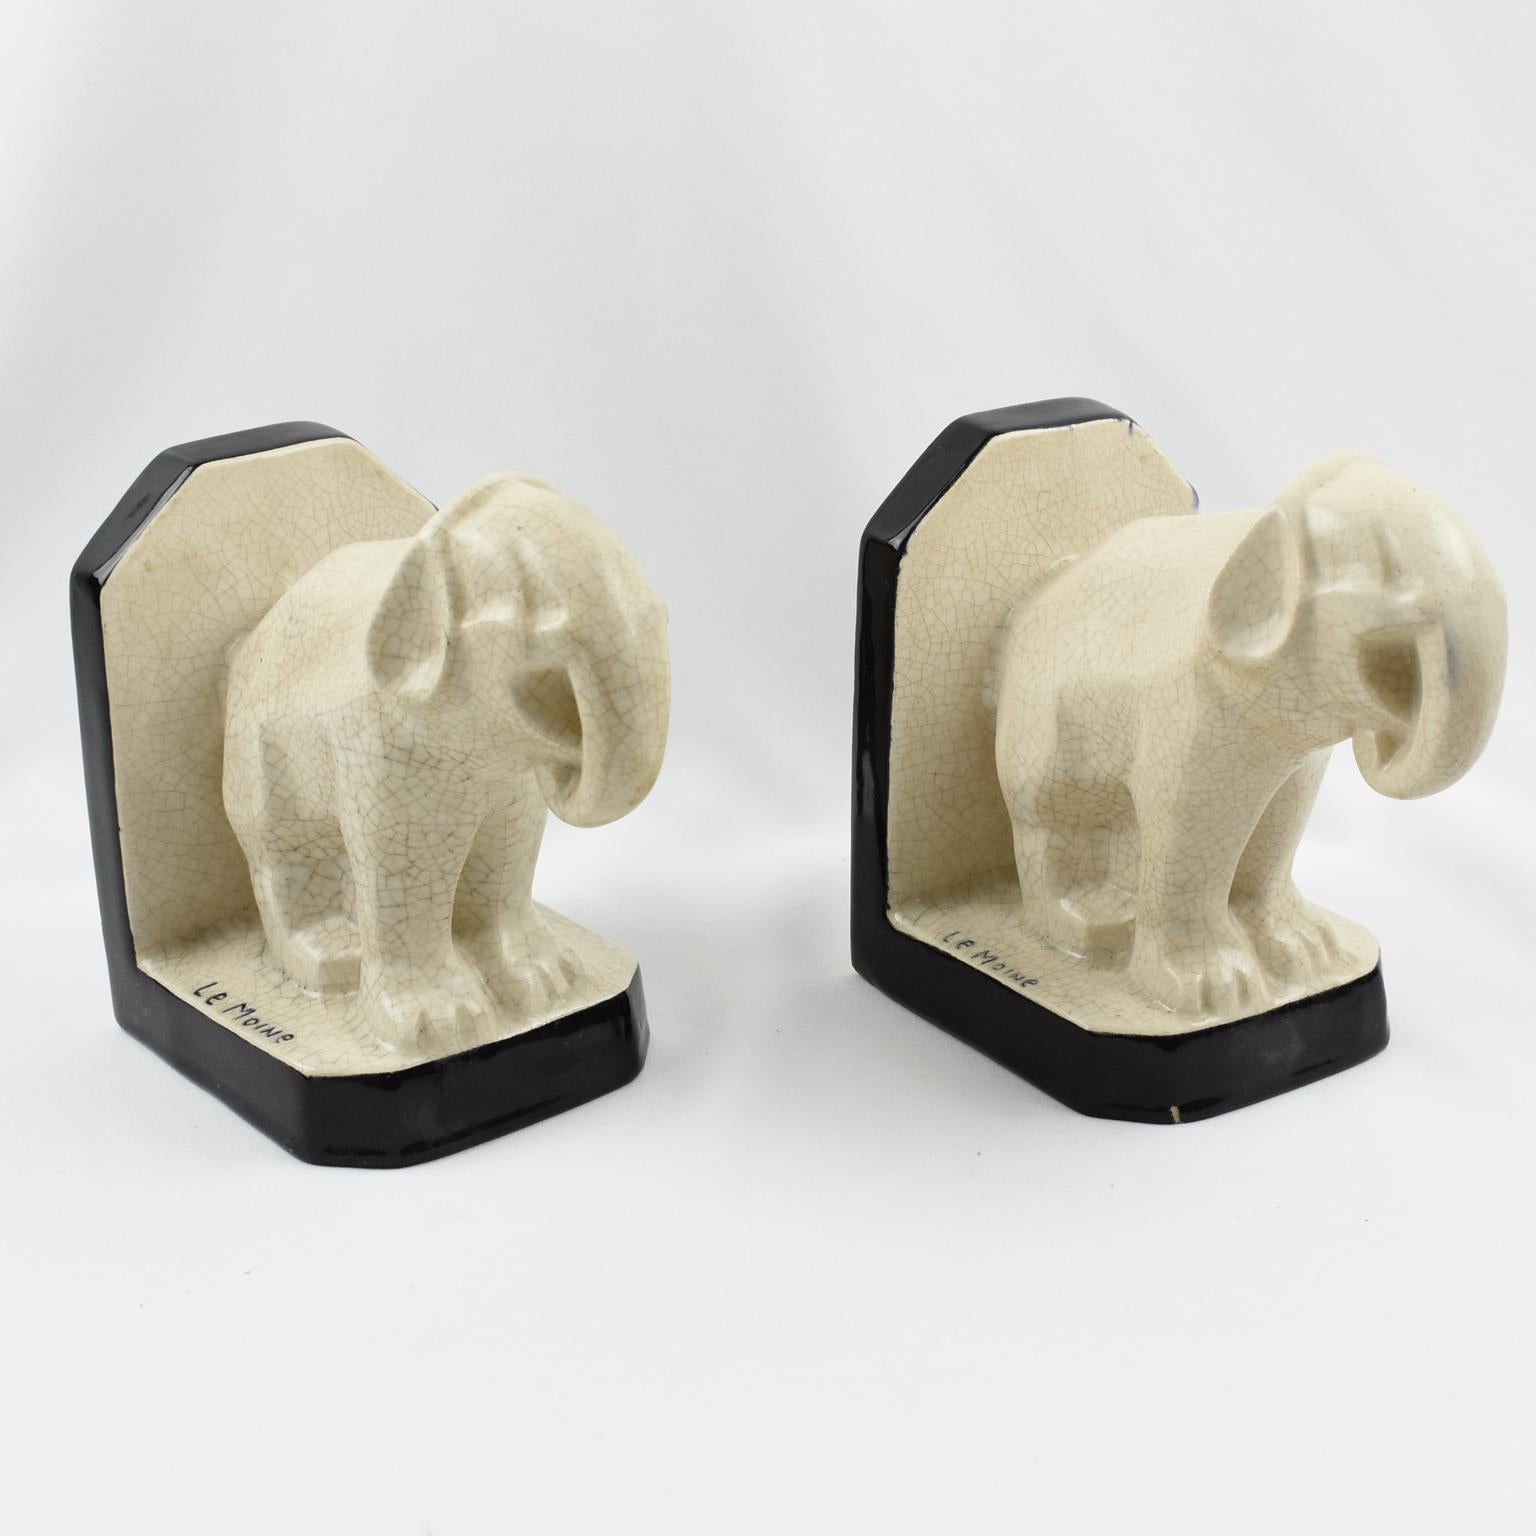 Art Deco Crackle Ceramic Elephant Sculpture Bookends by Le Moine, France 1930s For Sale 4